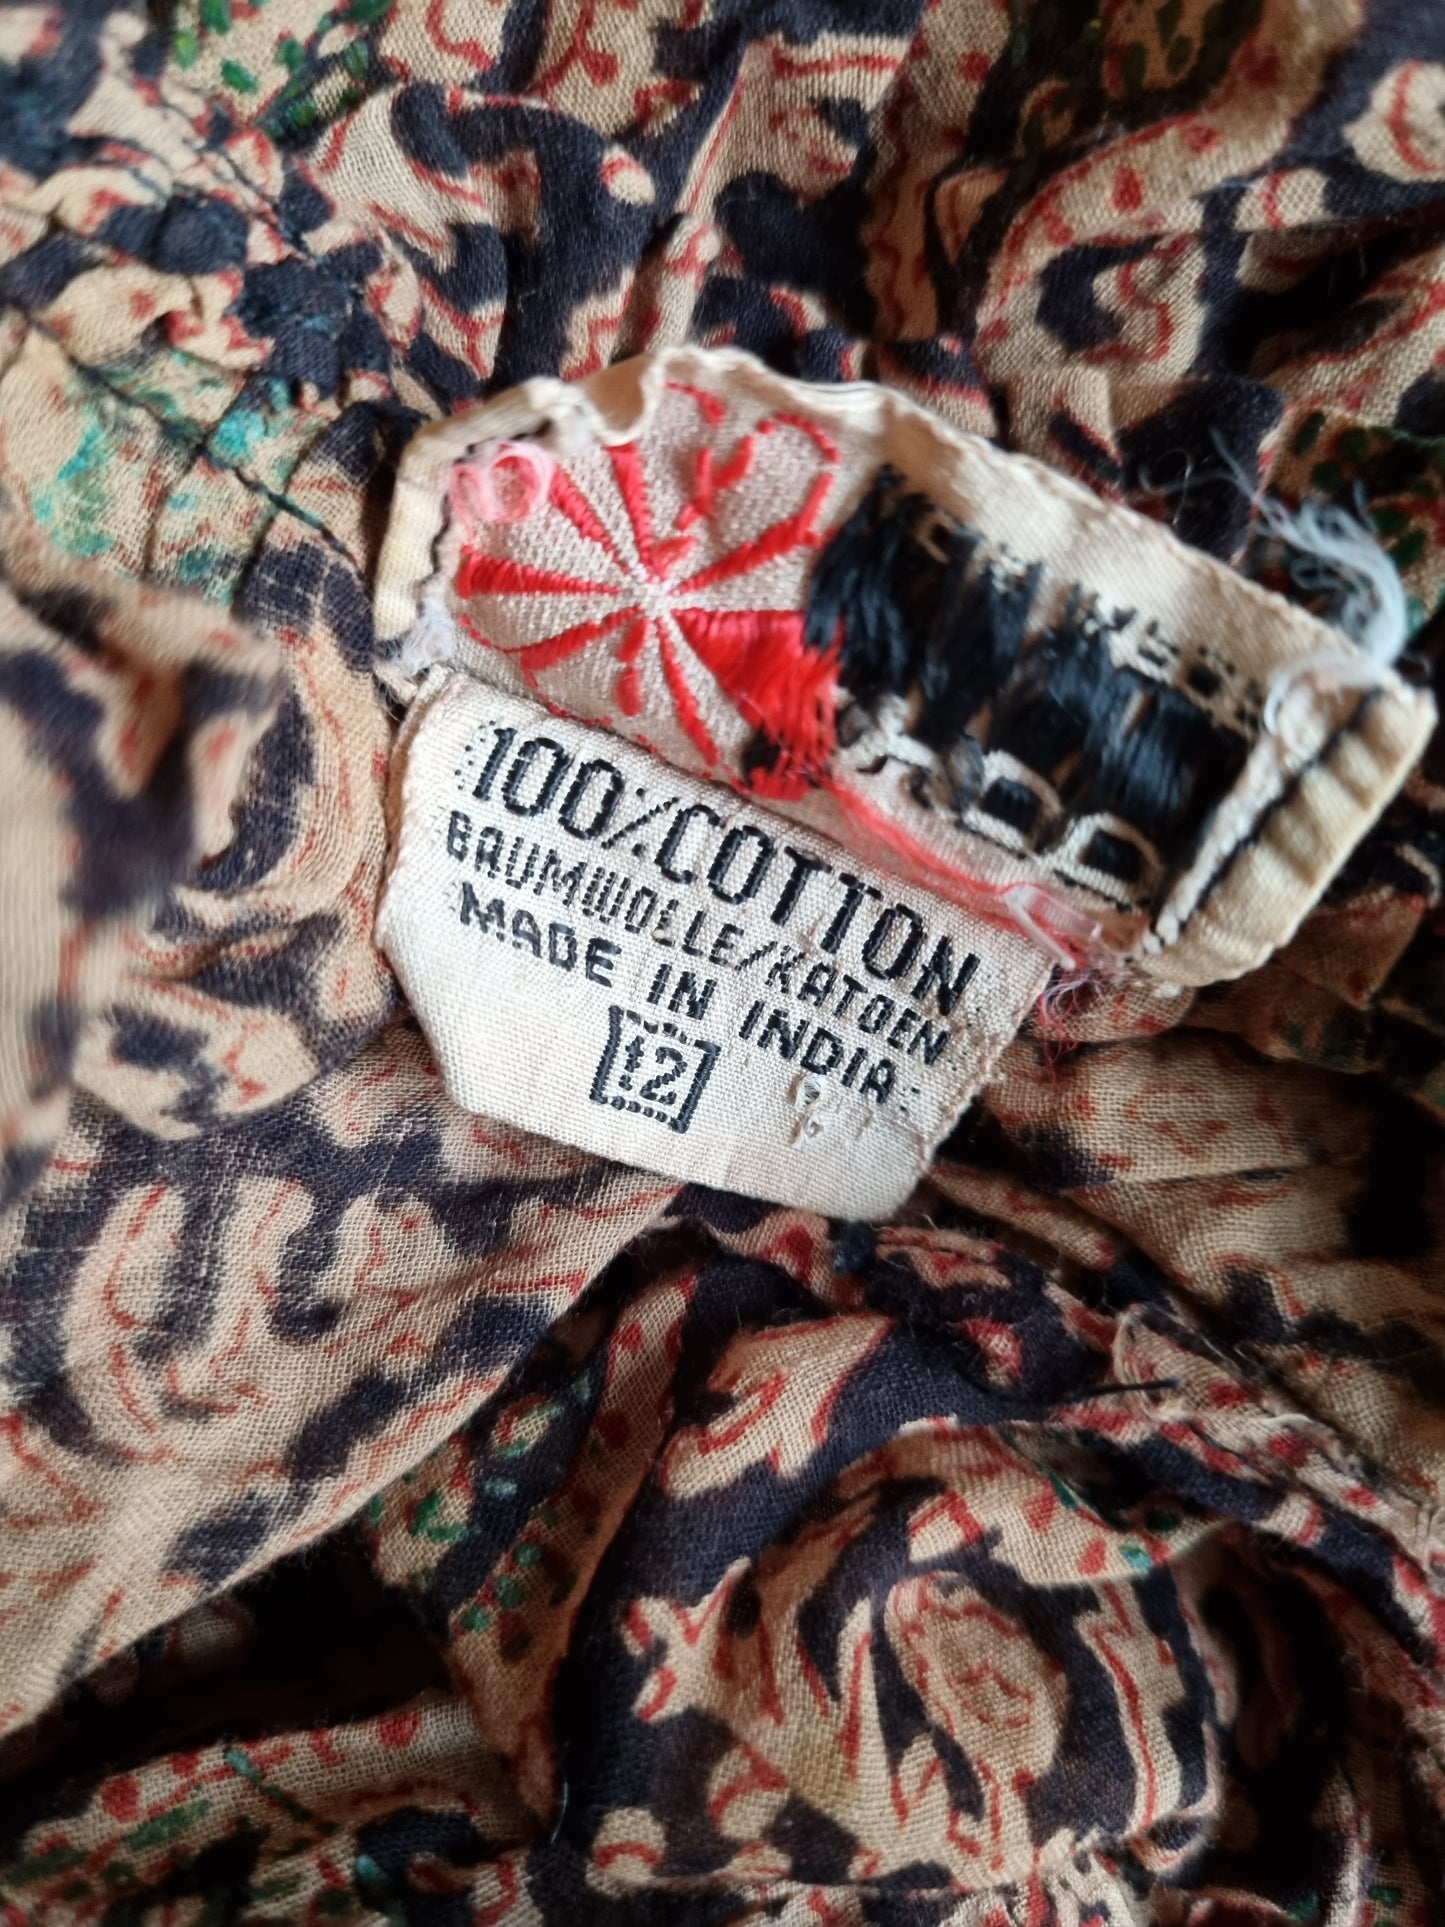 Vintage phool Indian cotton maxi dress